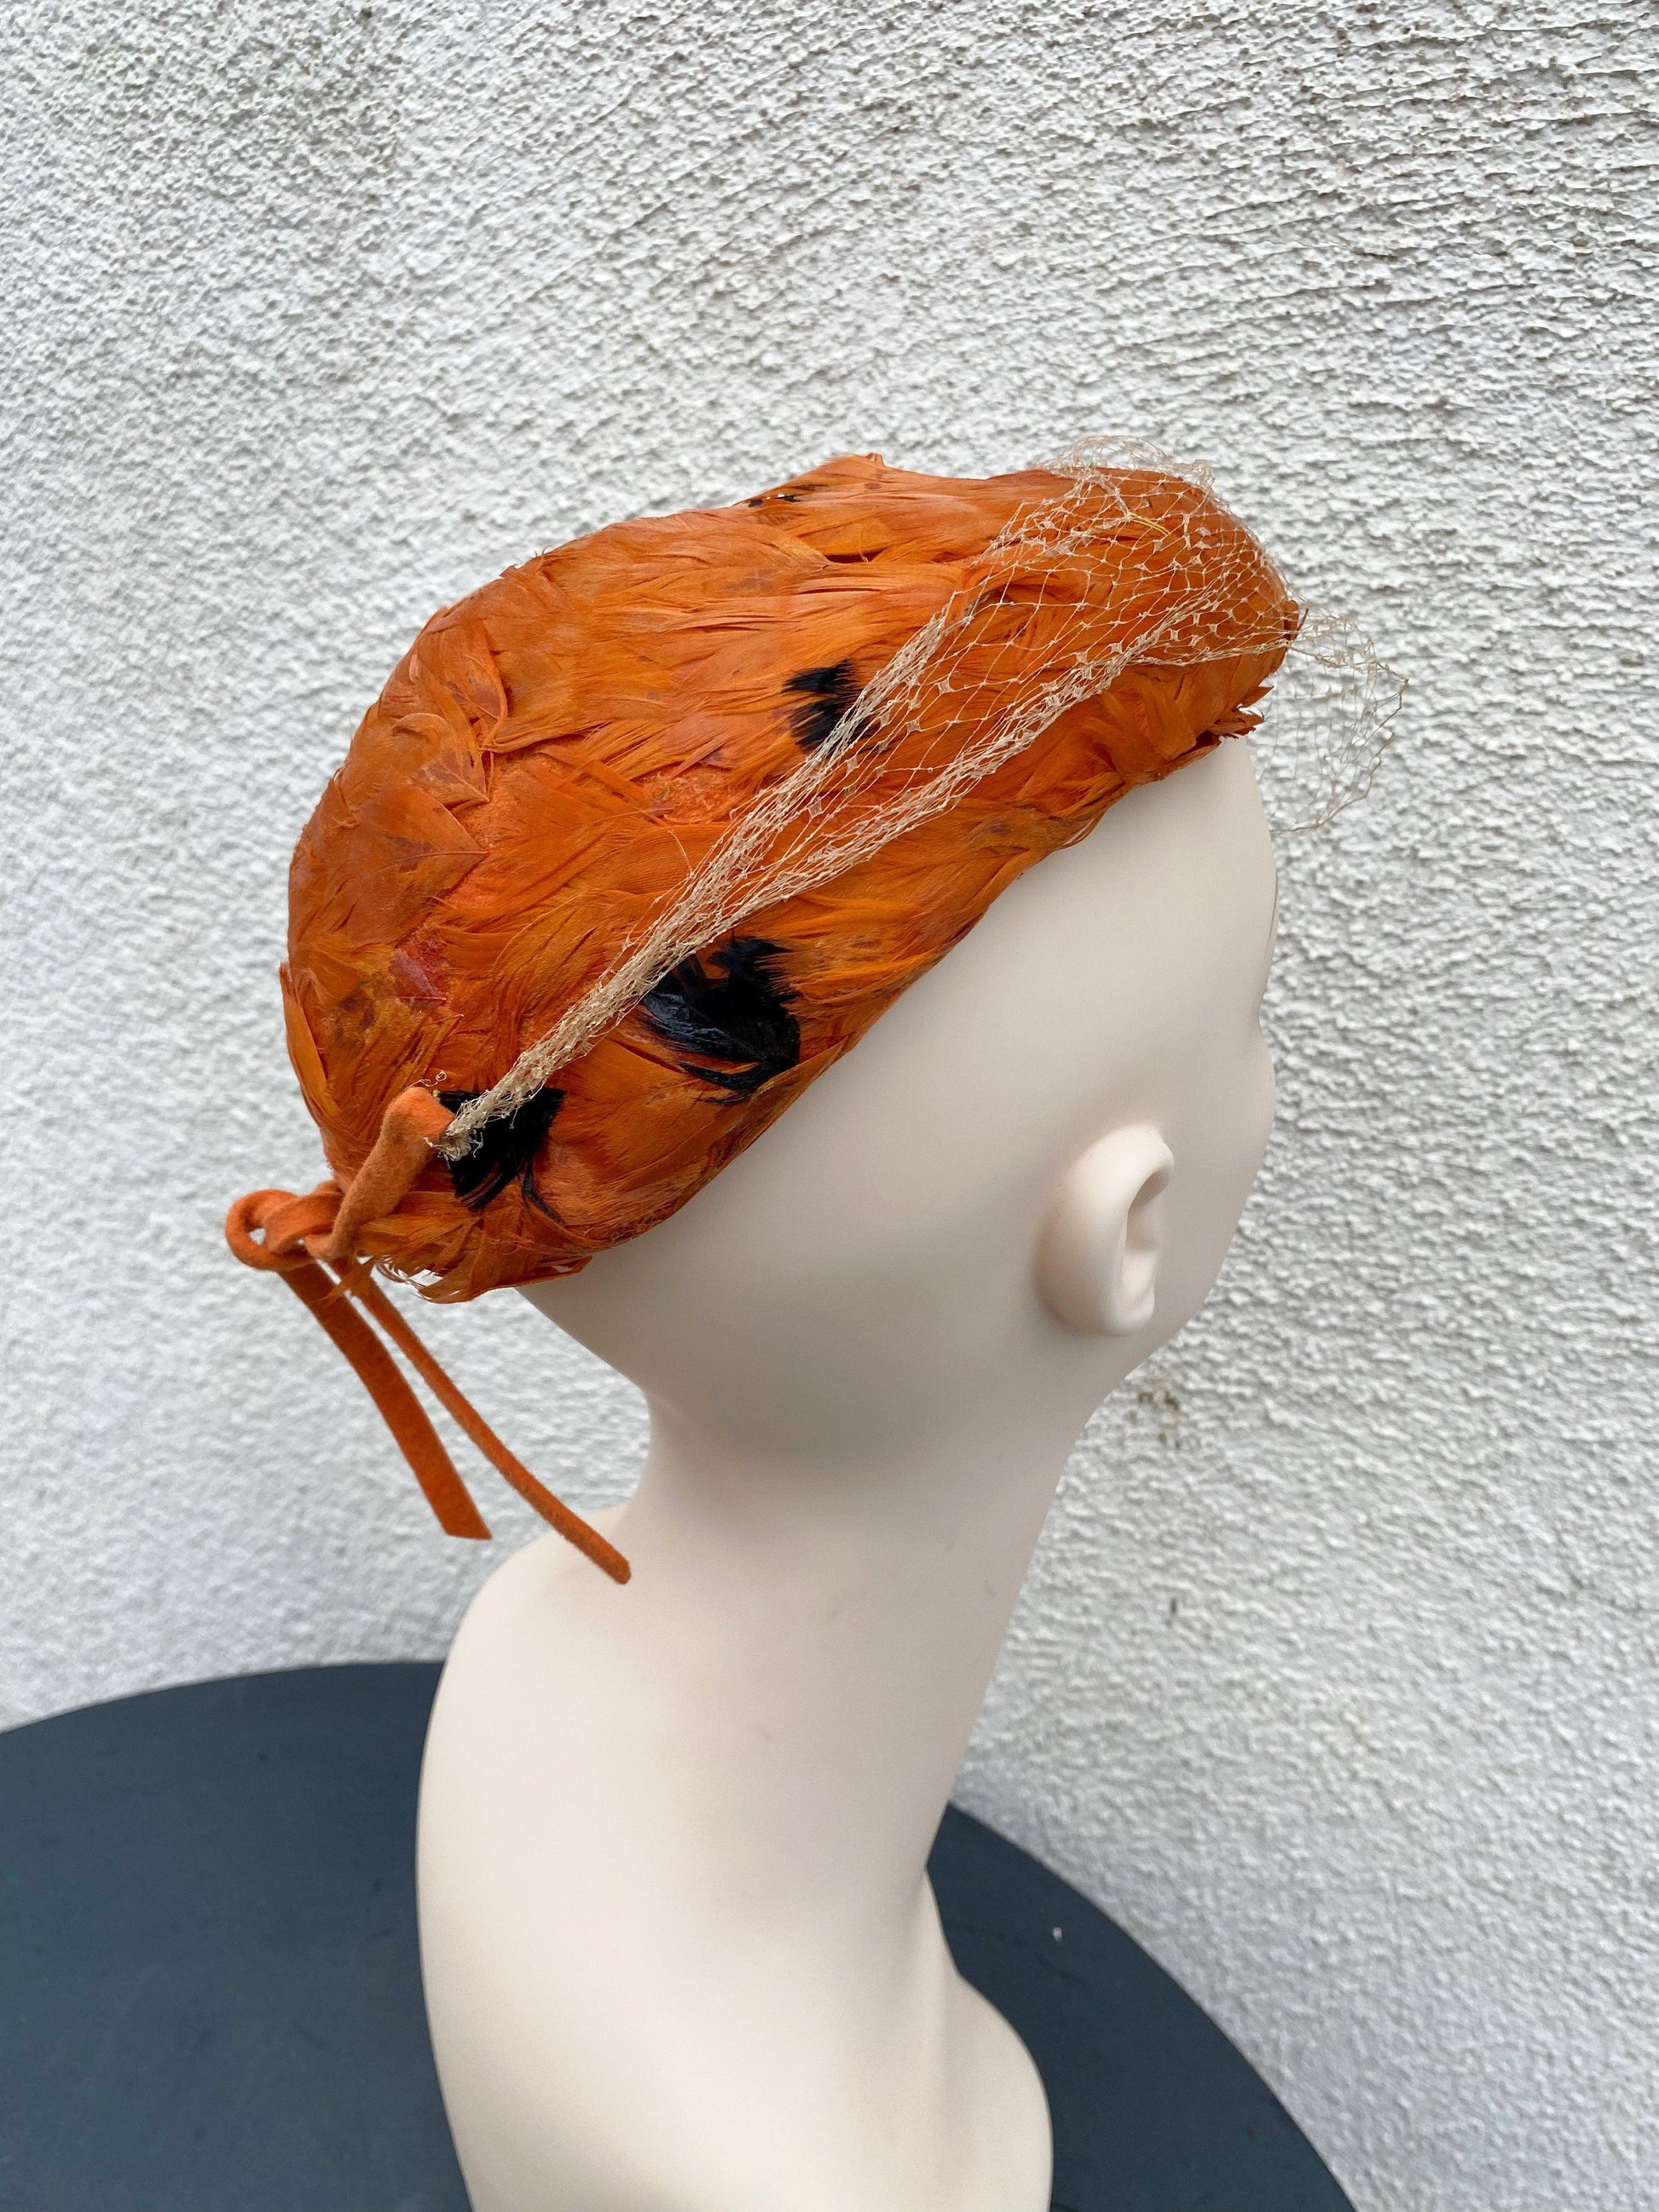 Vintage Bright Orange Feather Hat with Netting & a Rhinestone Broach - A Walk Thru Time Vintage